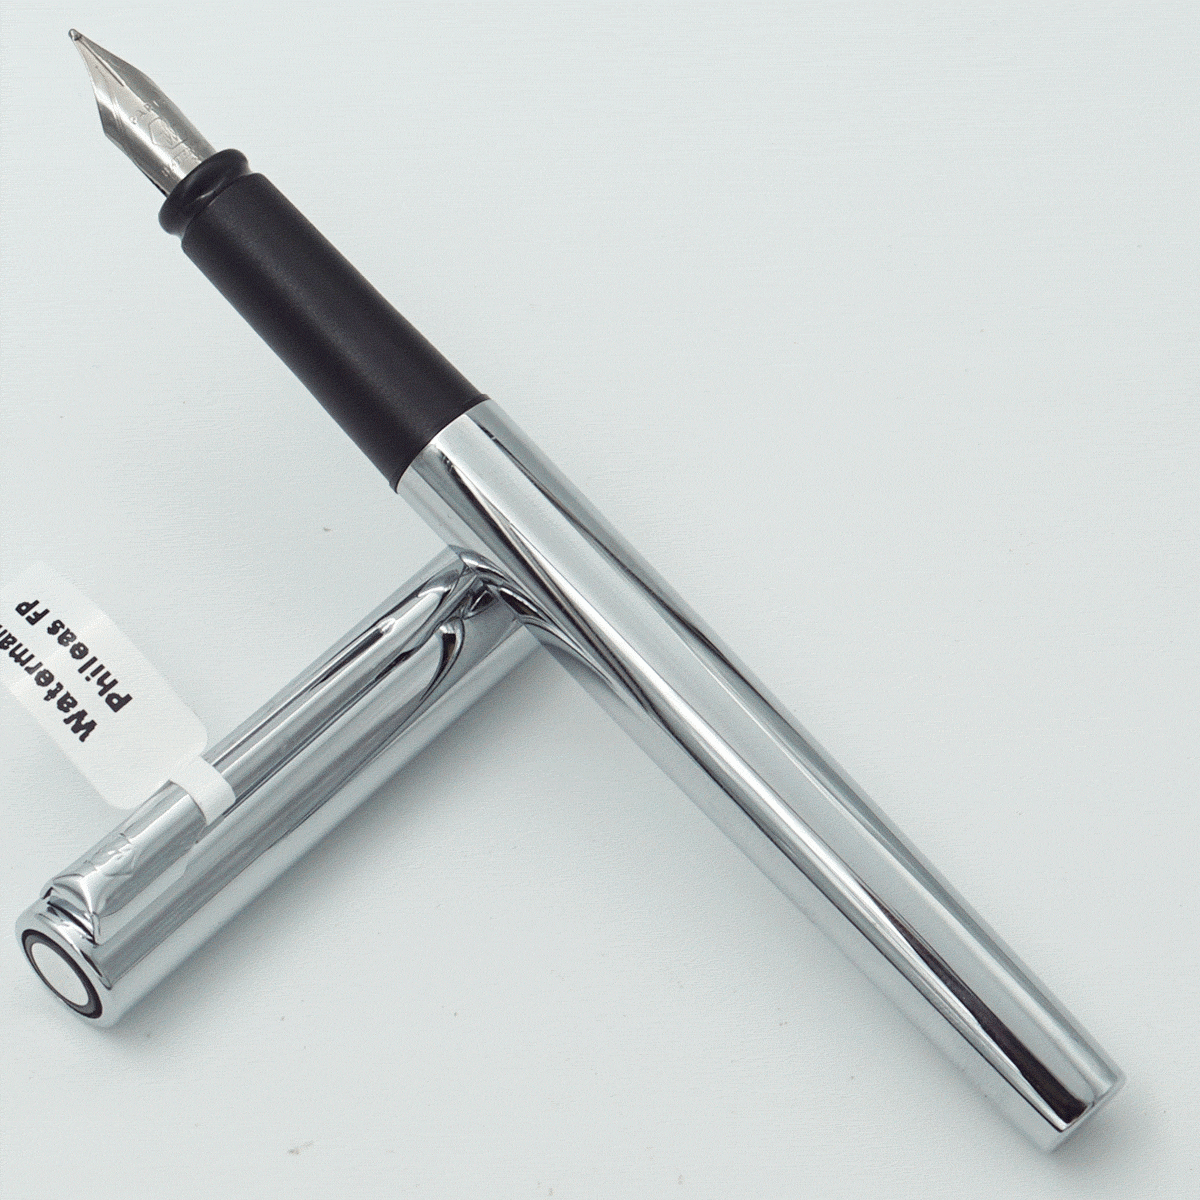 Waterman Phileas Chrome Silver Color Body With Silver Cap And Black Color Grip Medium Nib Converter Type Fountain Pen SKU 23930